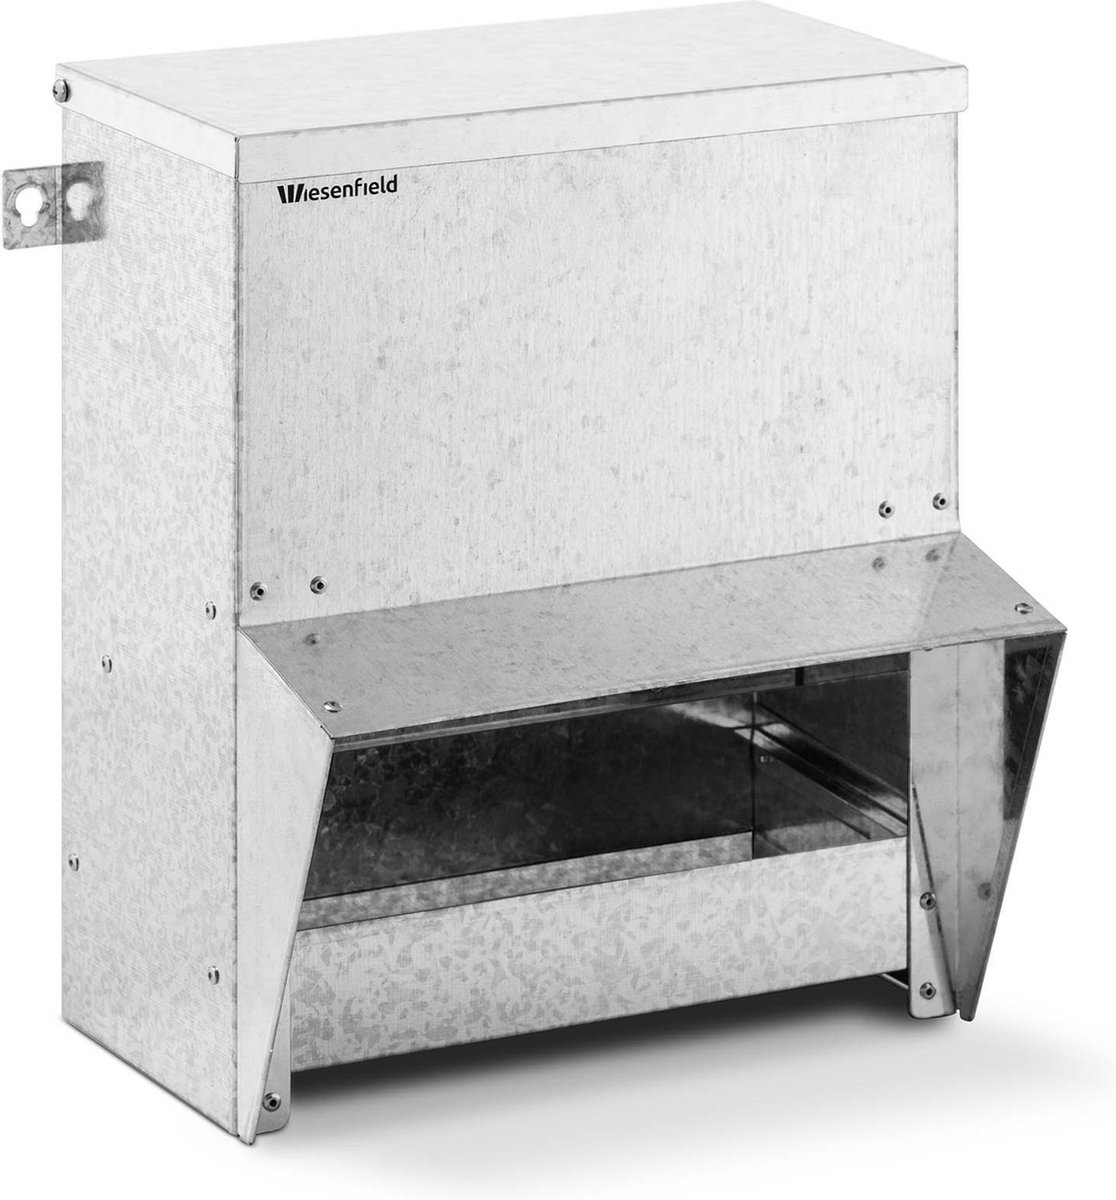 Wiesenfield Voerautomaat voor kippen - Automatisch - 5 kg - Wiesenfield